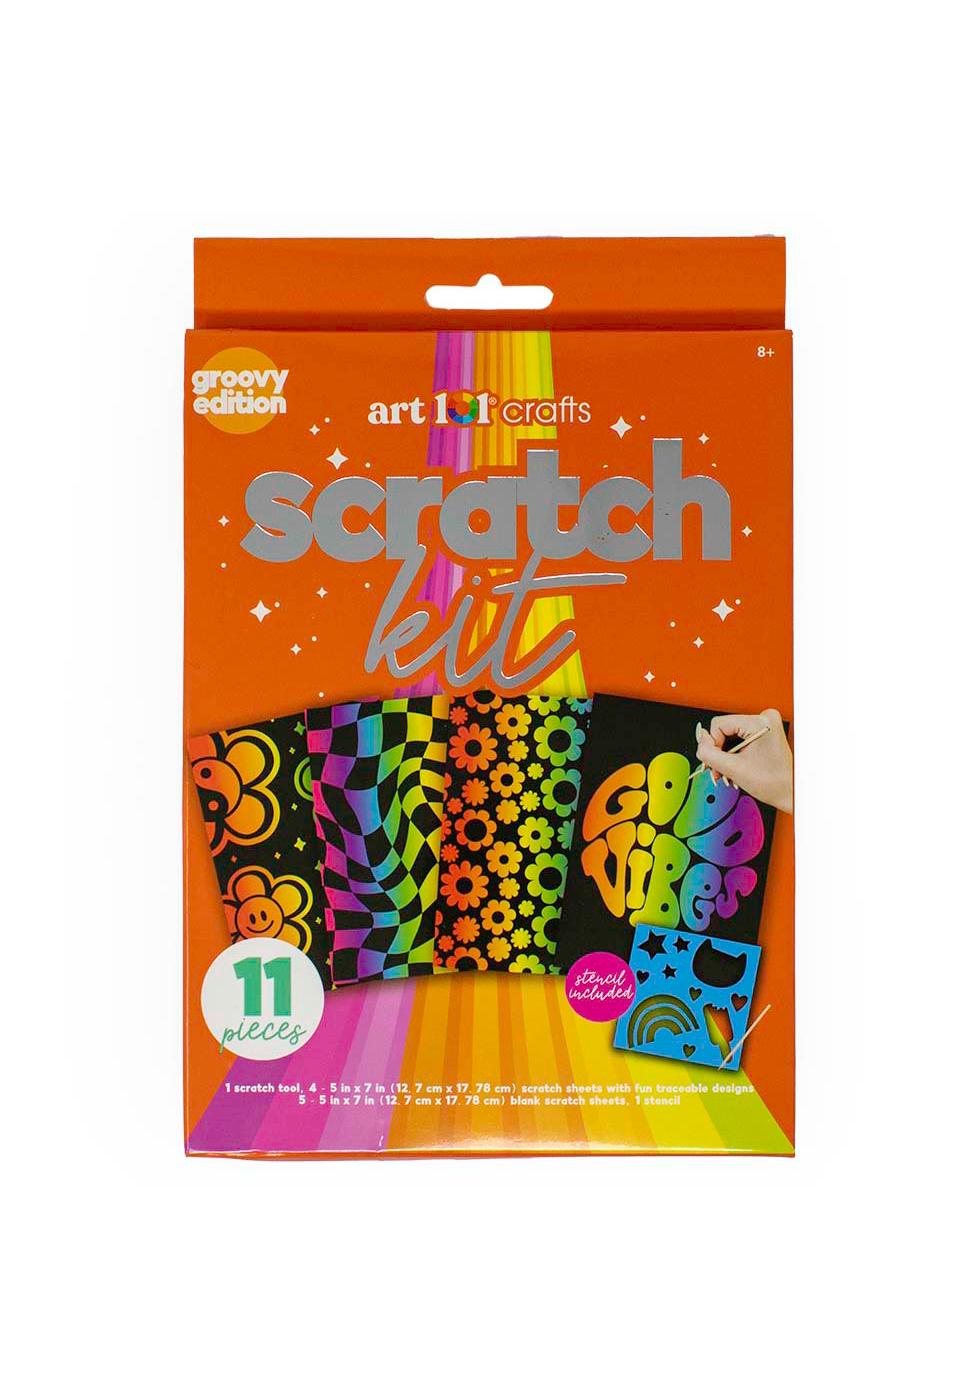 Art 101 Crafts Scratch Kit; image 1 of 5